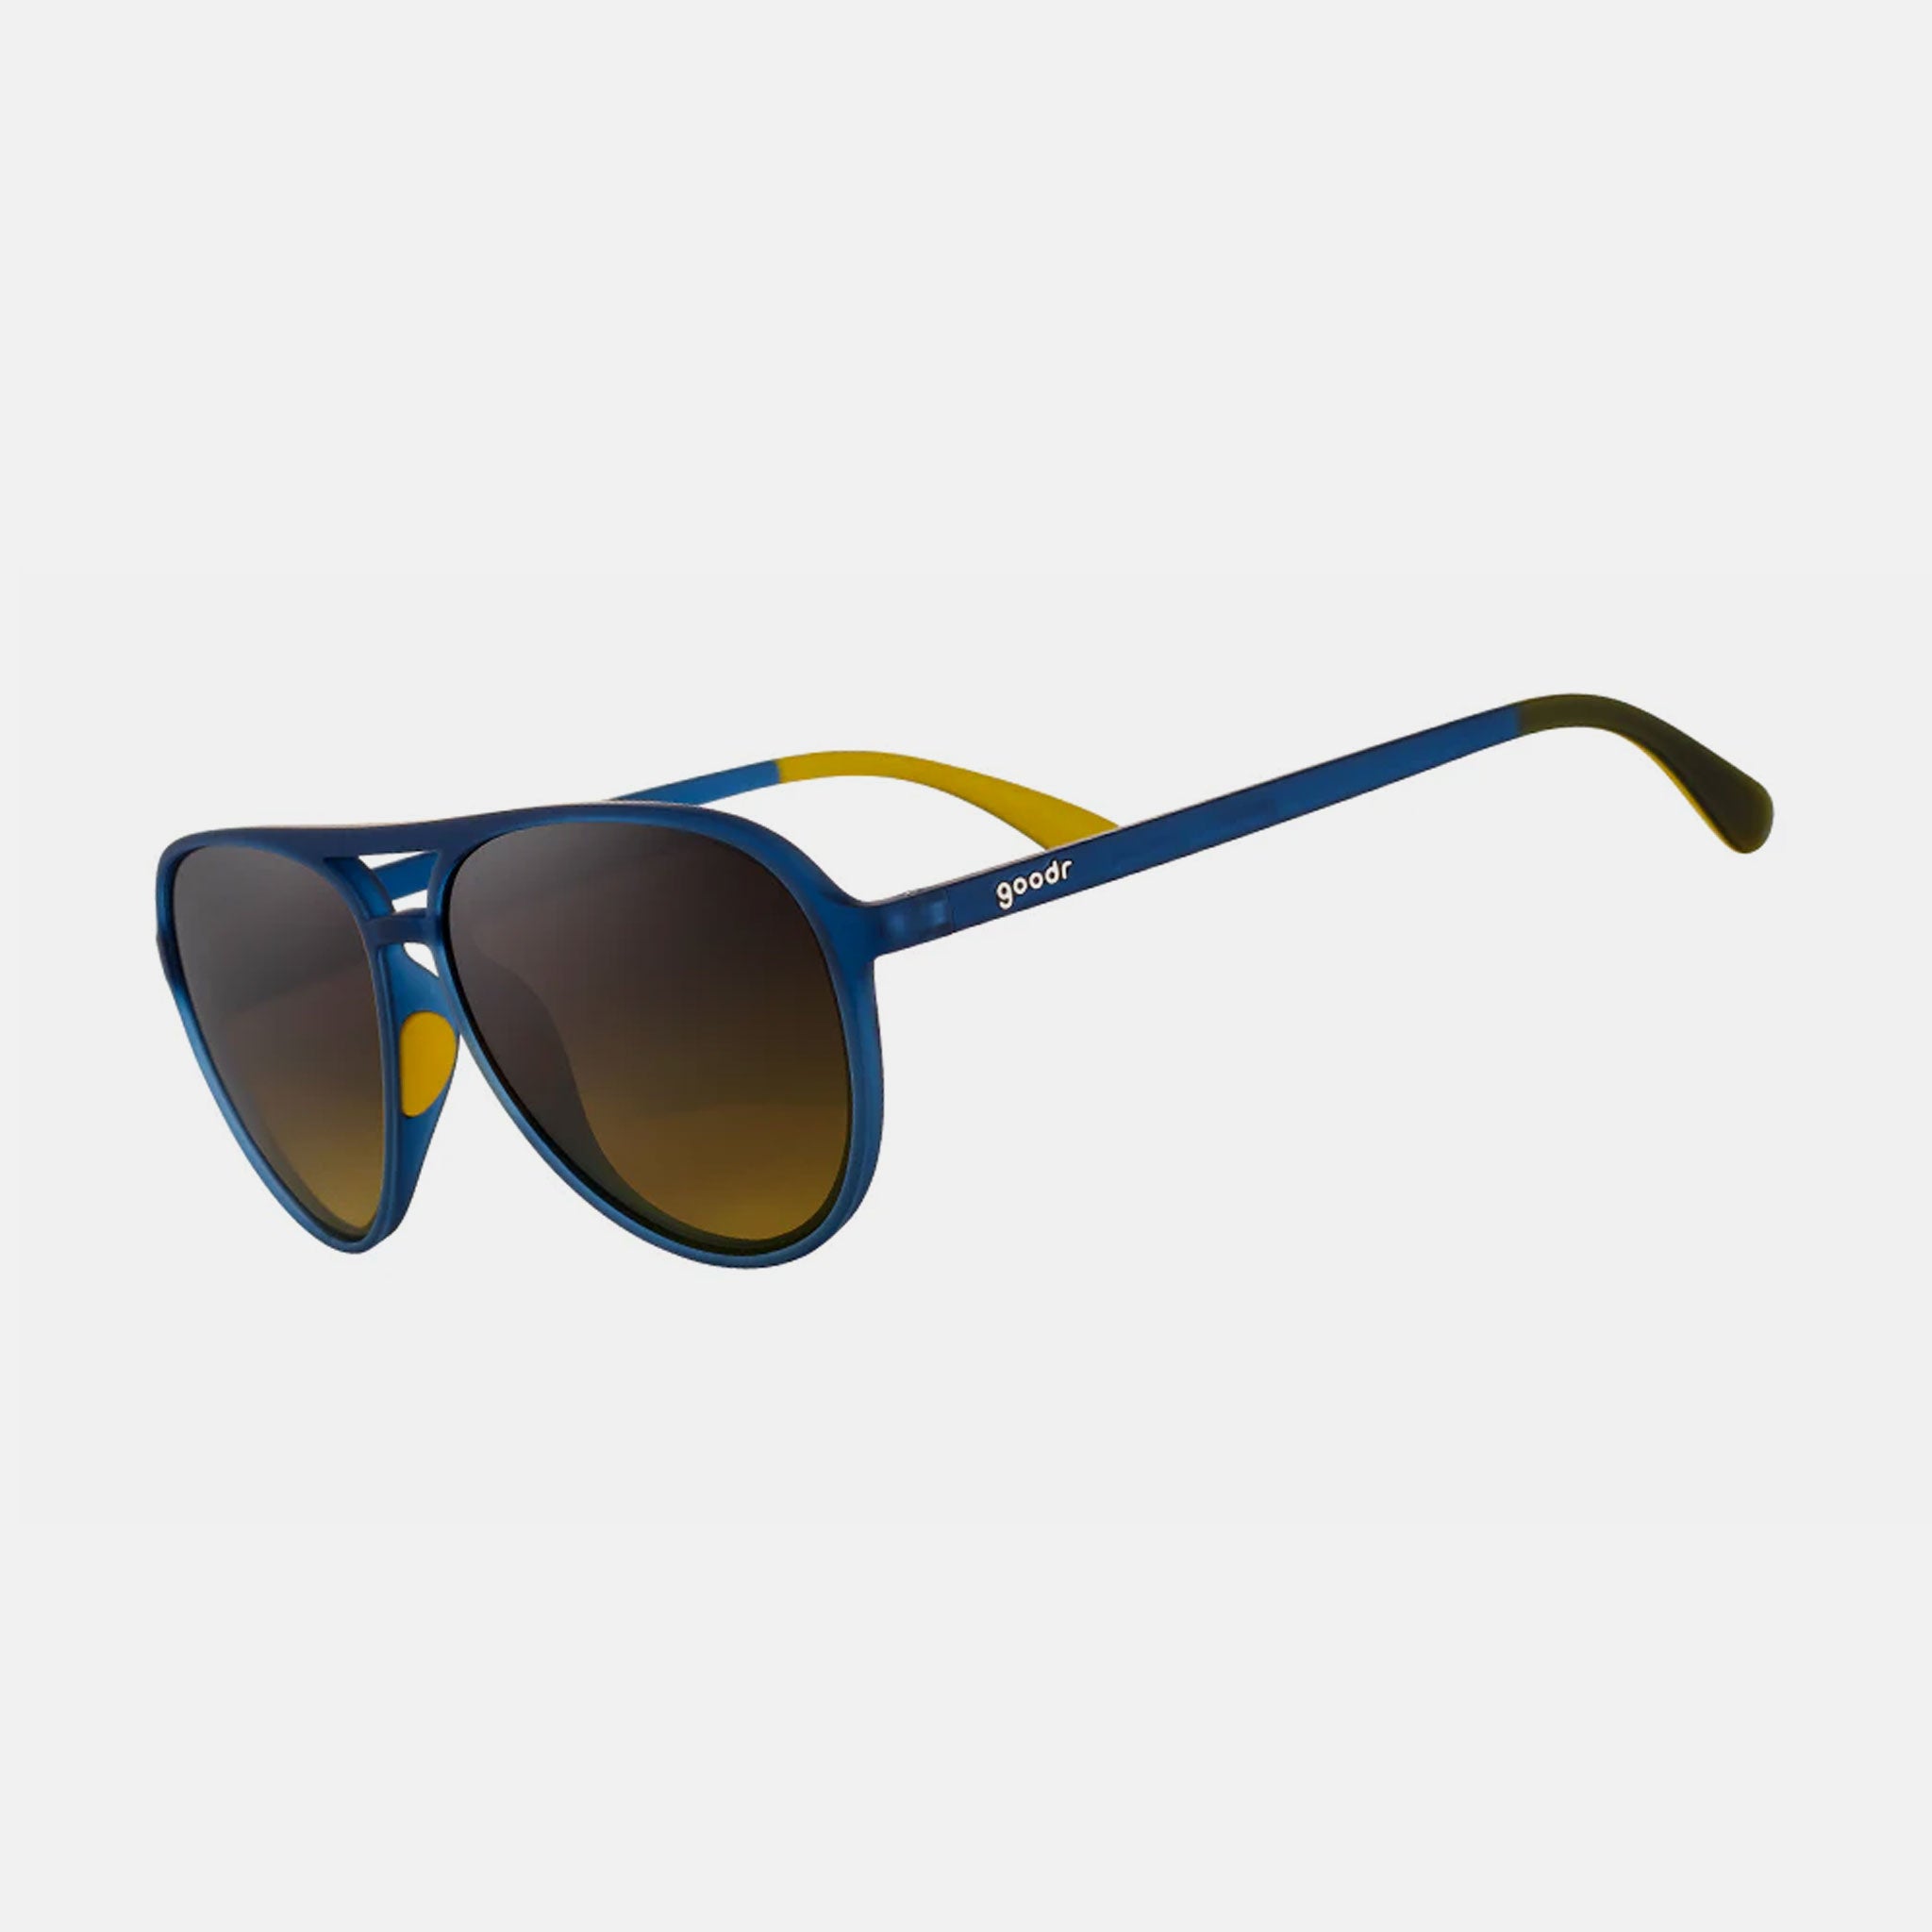 goodr-sunglasses-aviator-blue-frequent-skymall_01.jpg